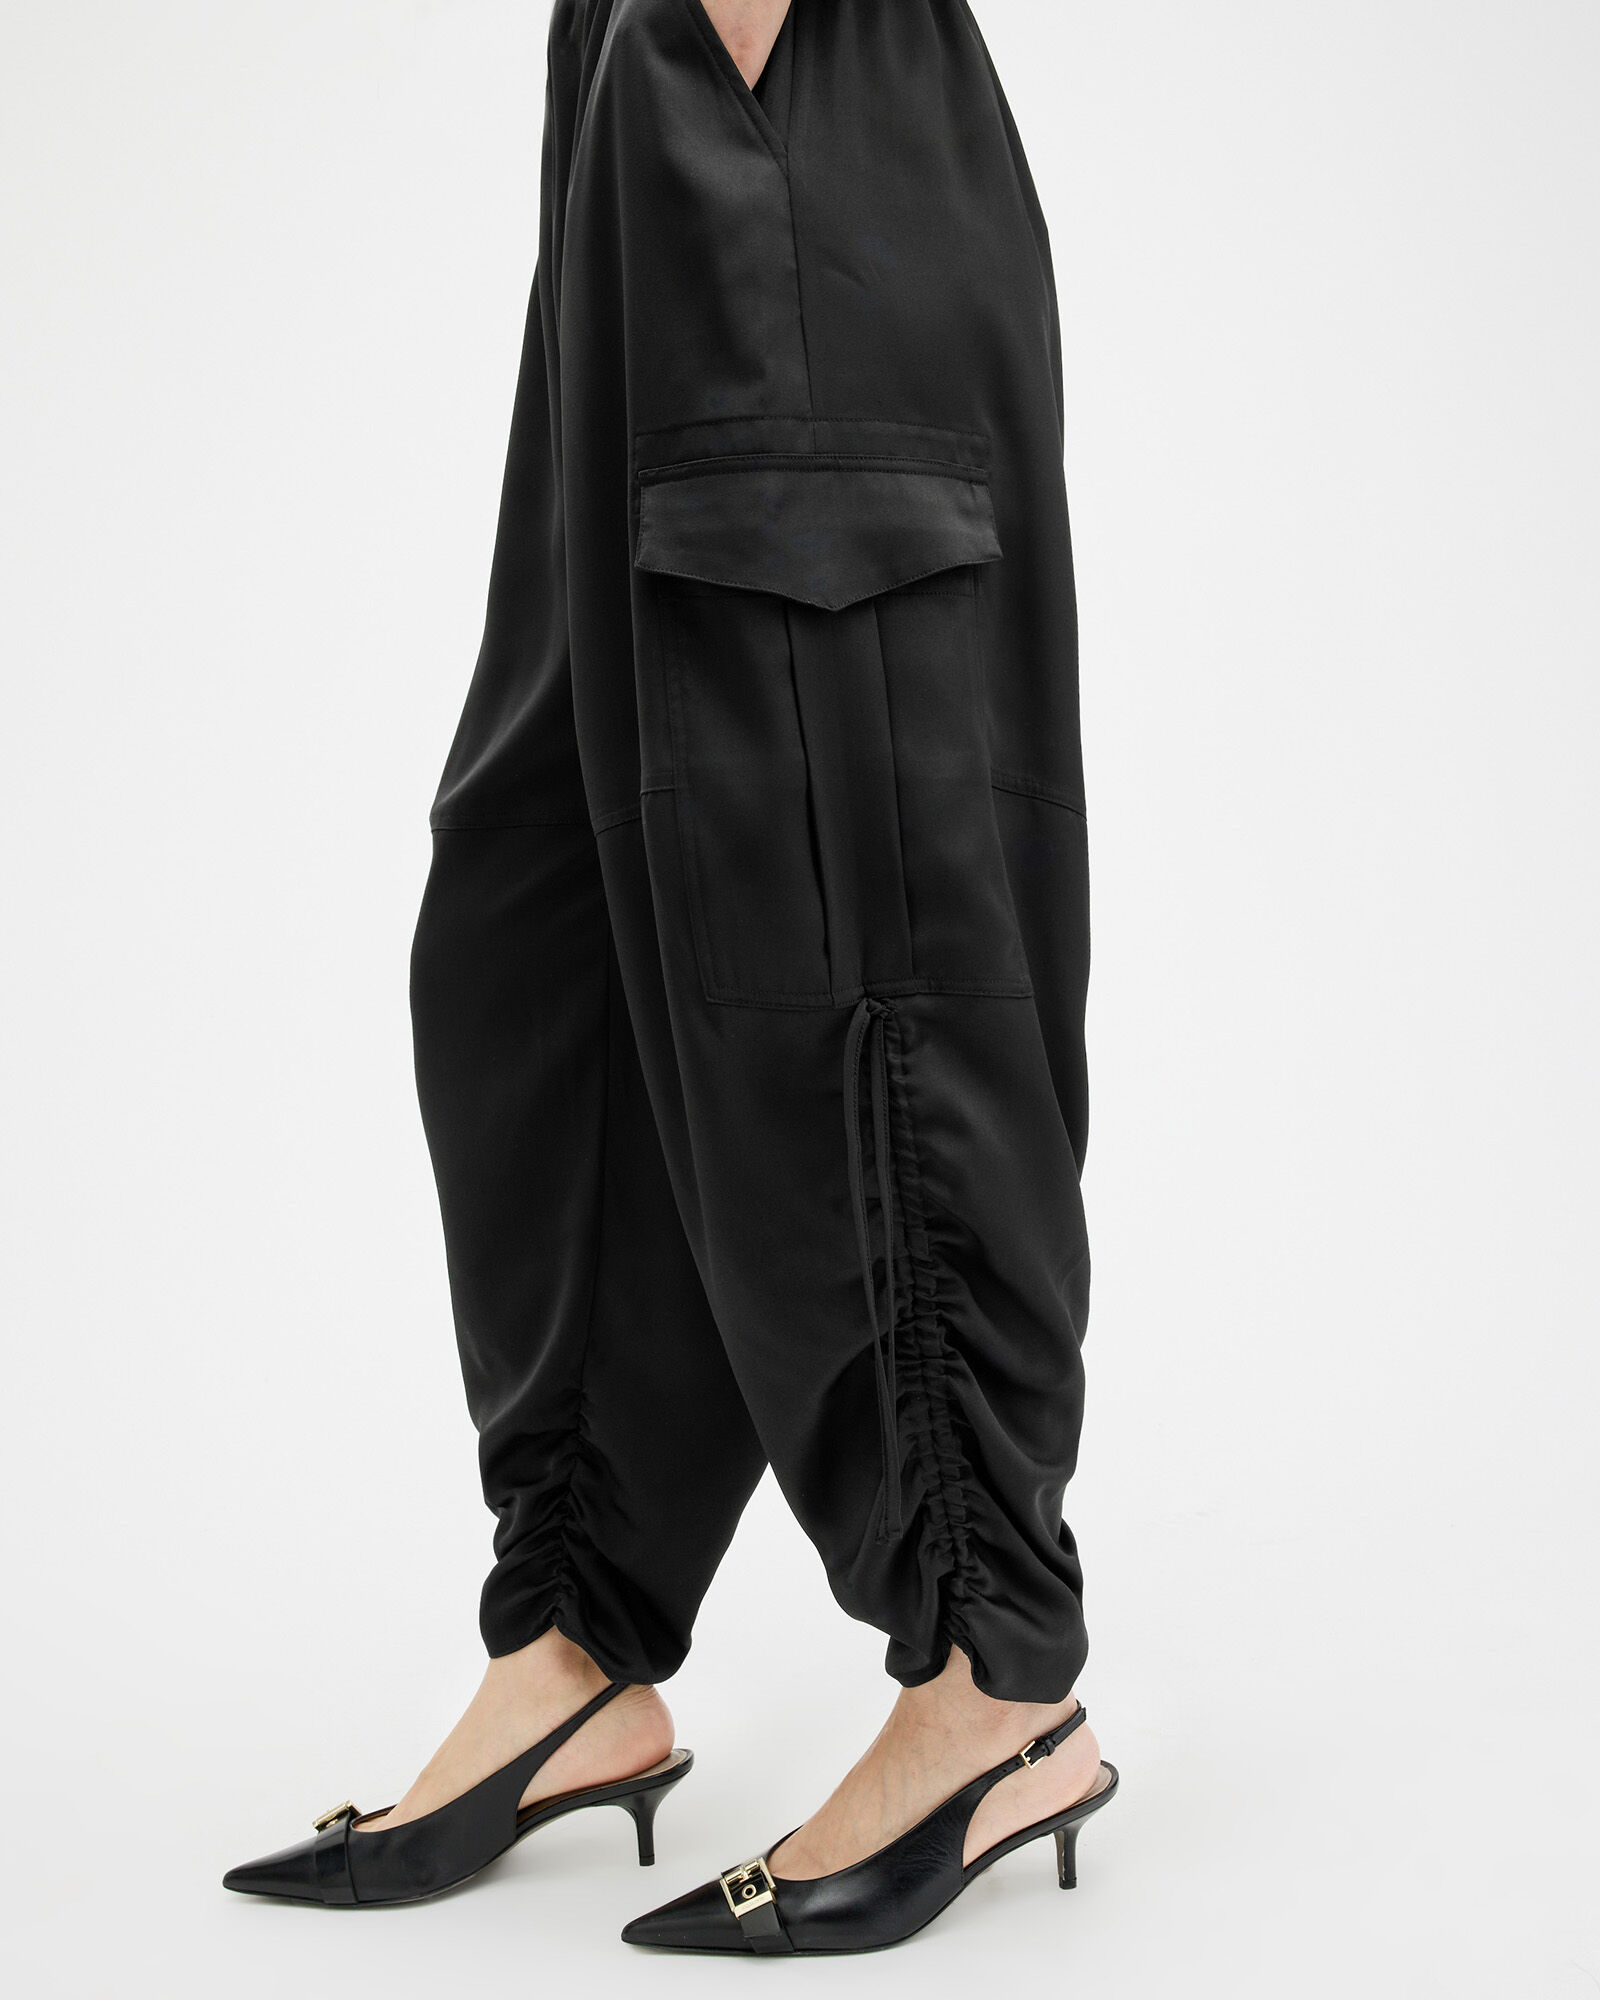 Designer Fashion Cargo Pants are Trending, Like These 10 best - Dandelion  Chandelier